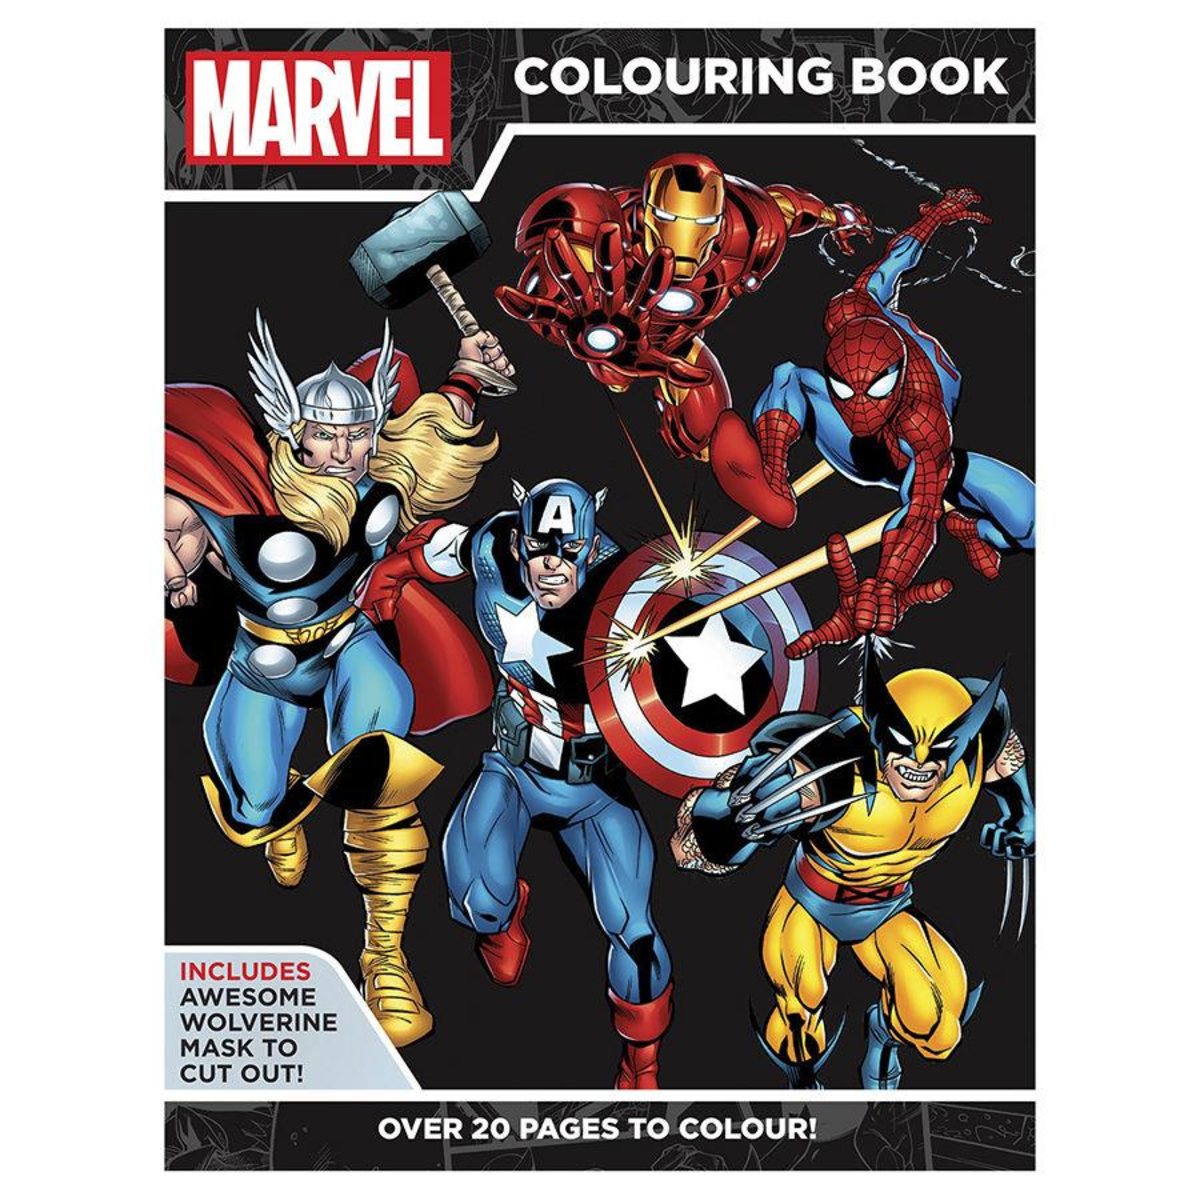 Marvel Colouring Book Kmart